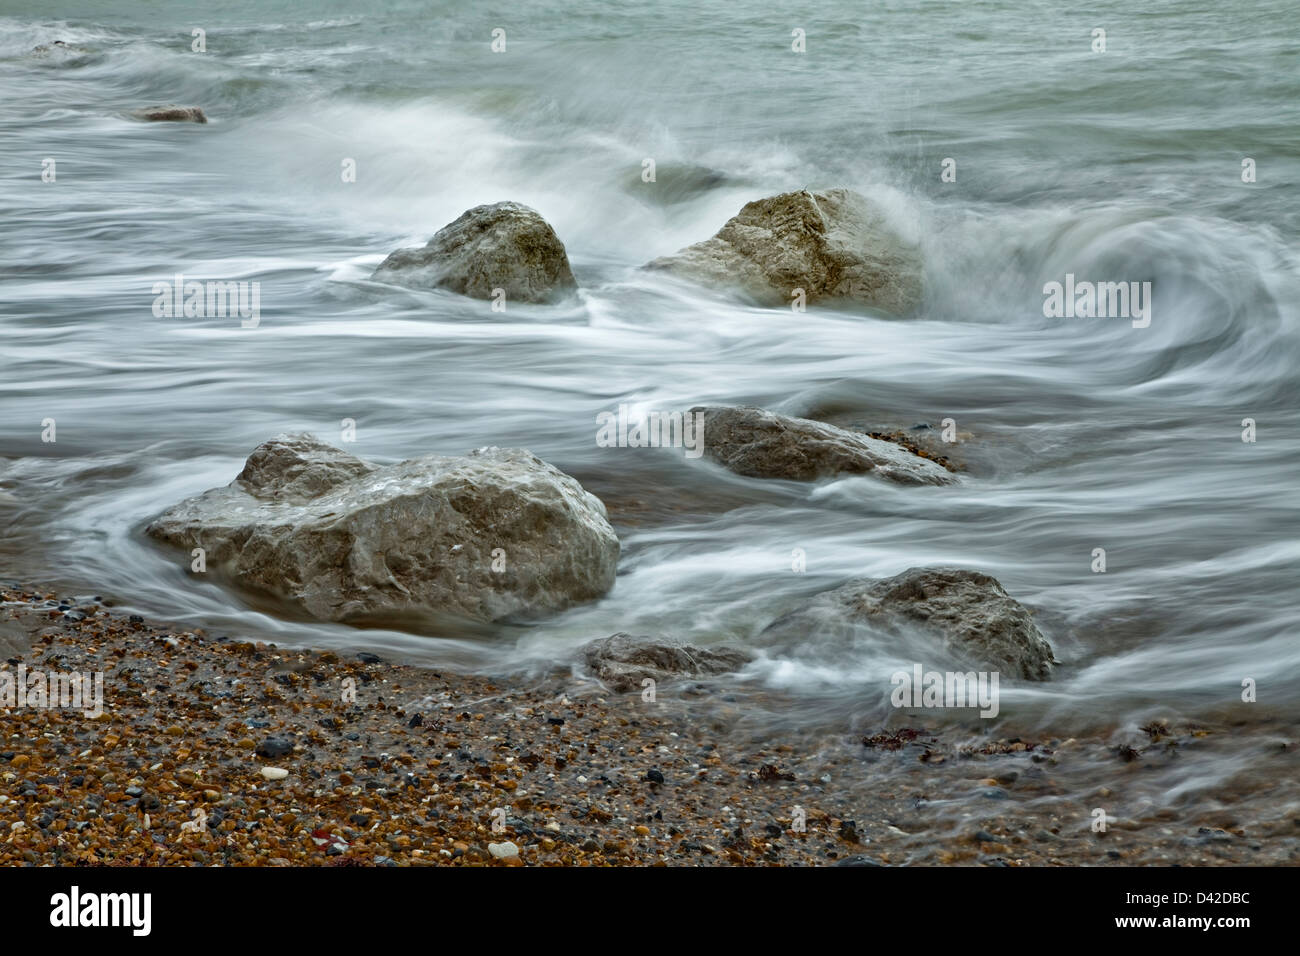 Aleja ola sobre las rocas de la costa de Worthing, Worthing, West Sussex, UK Foto de stock